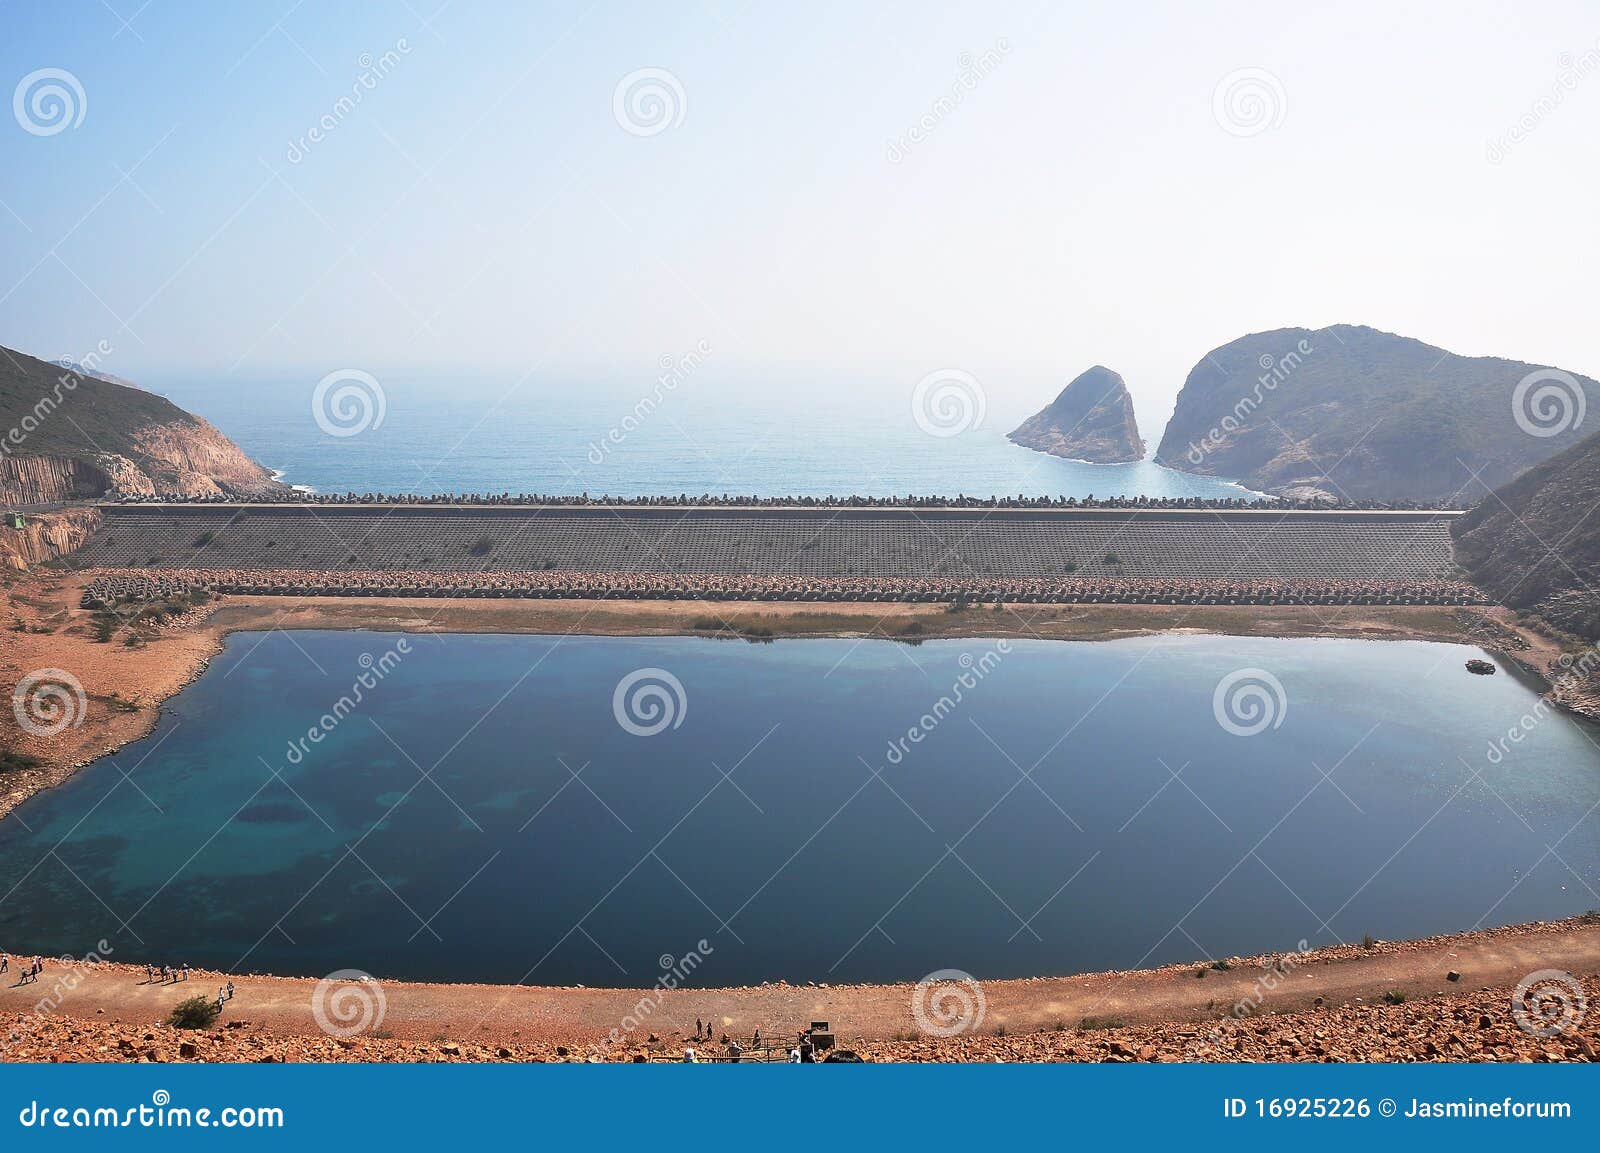 high island reservoir